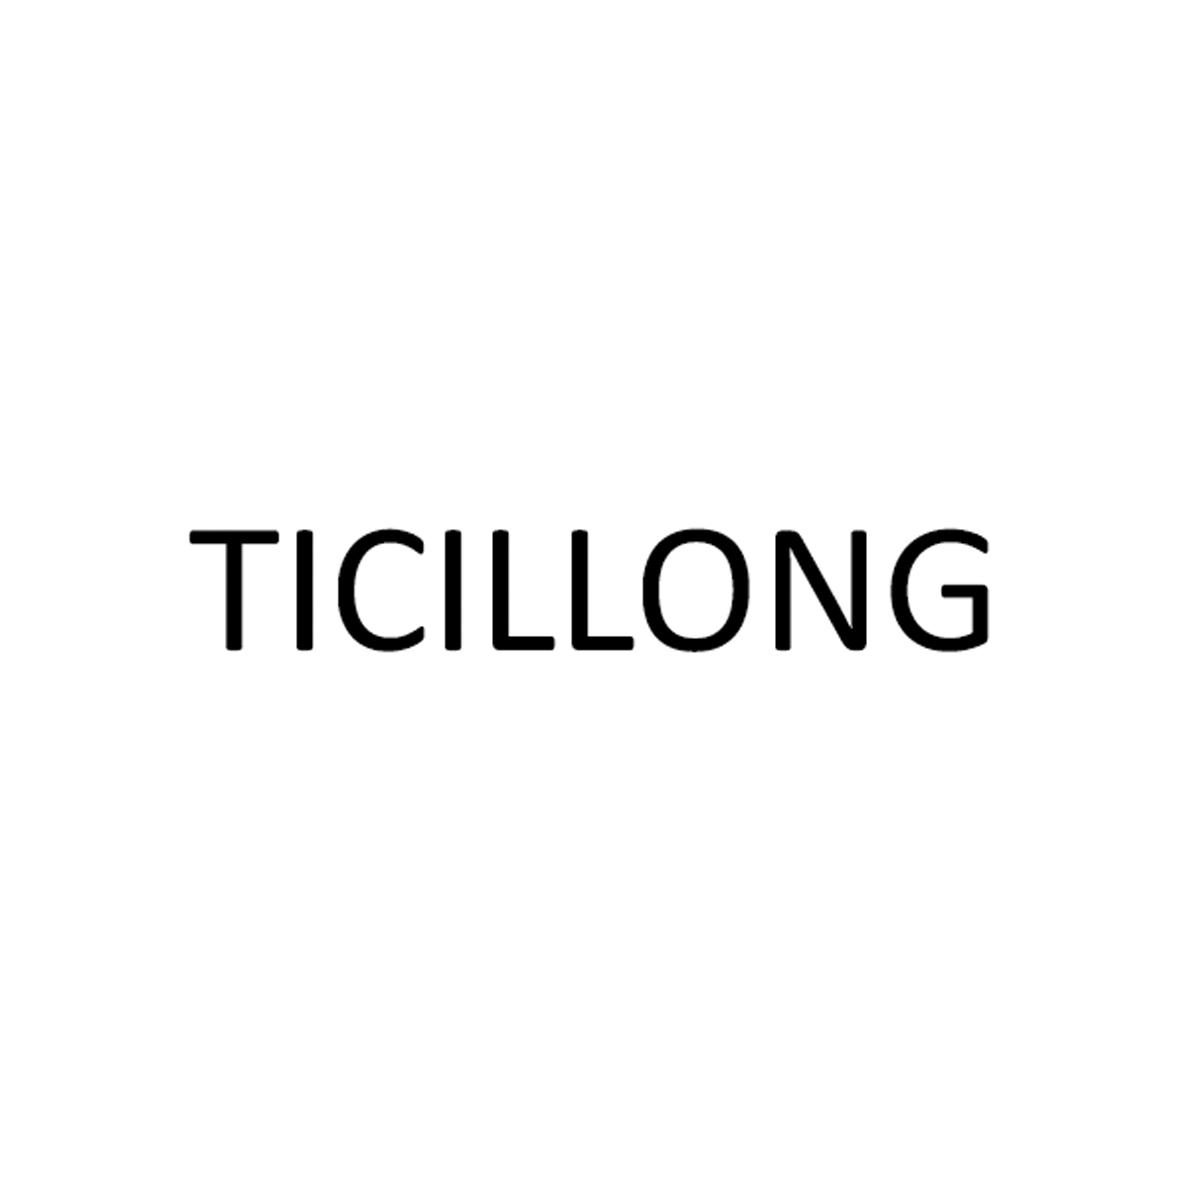 TICILLONG